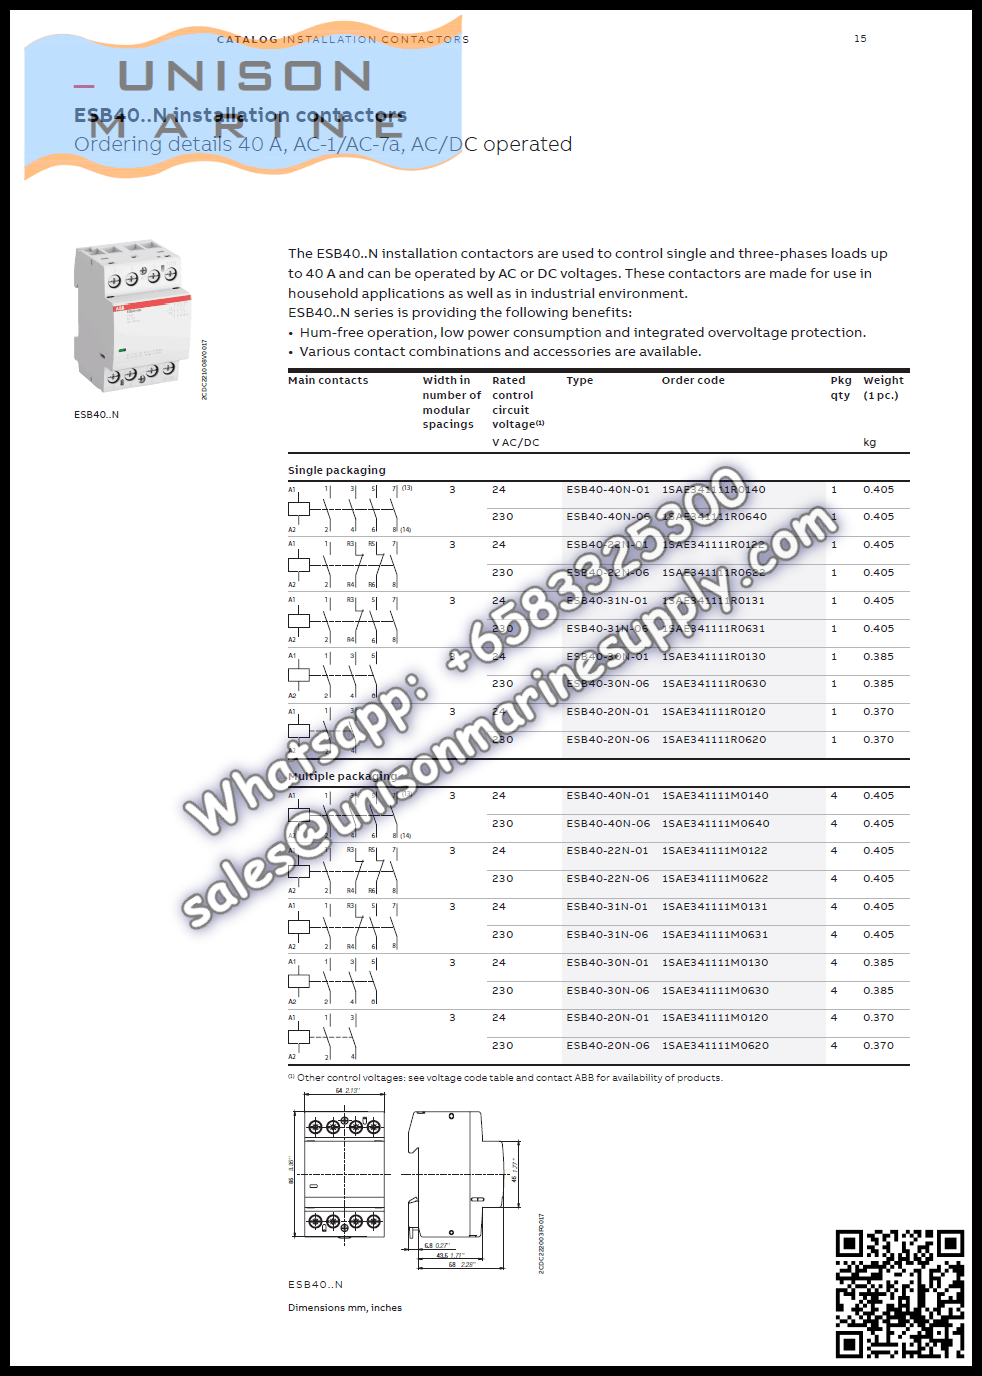 ABB Installation contactors ESB Series ESB25-22N